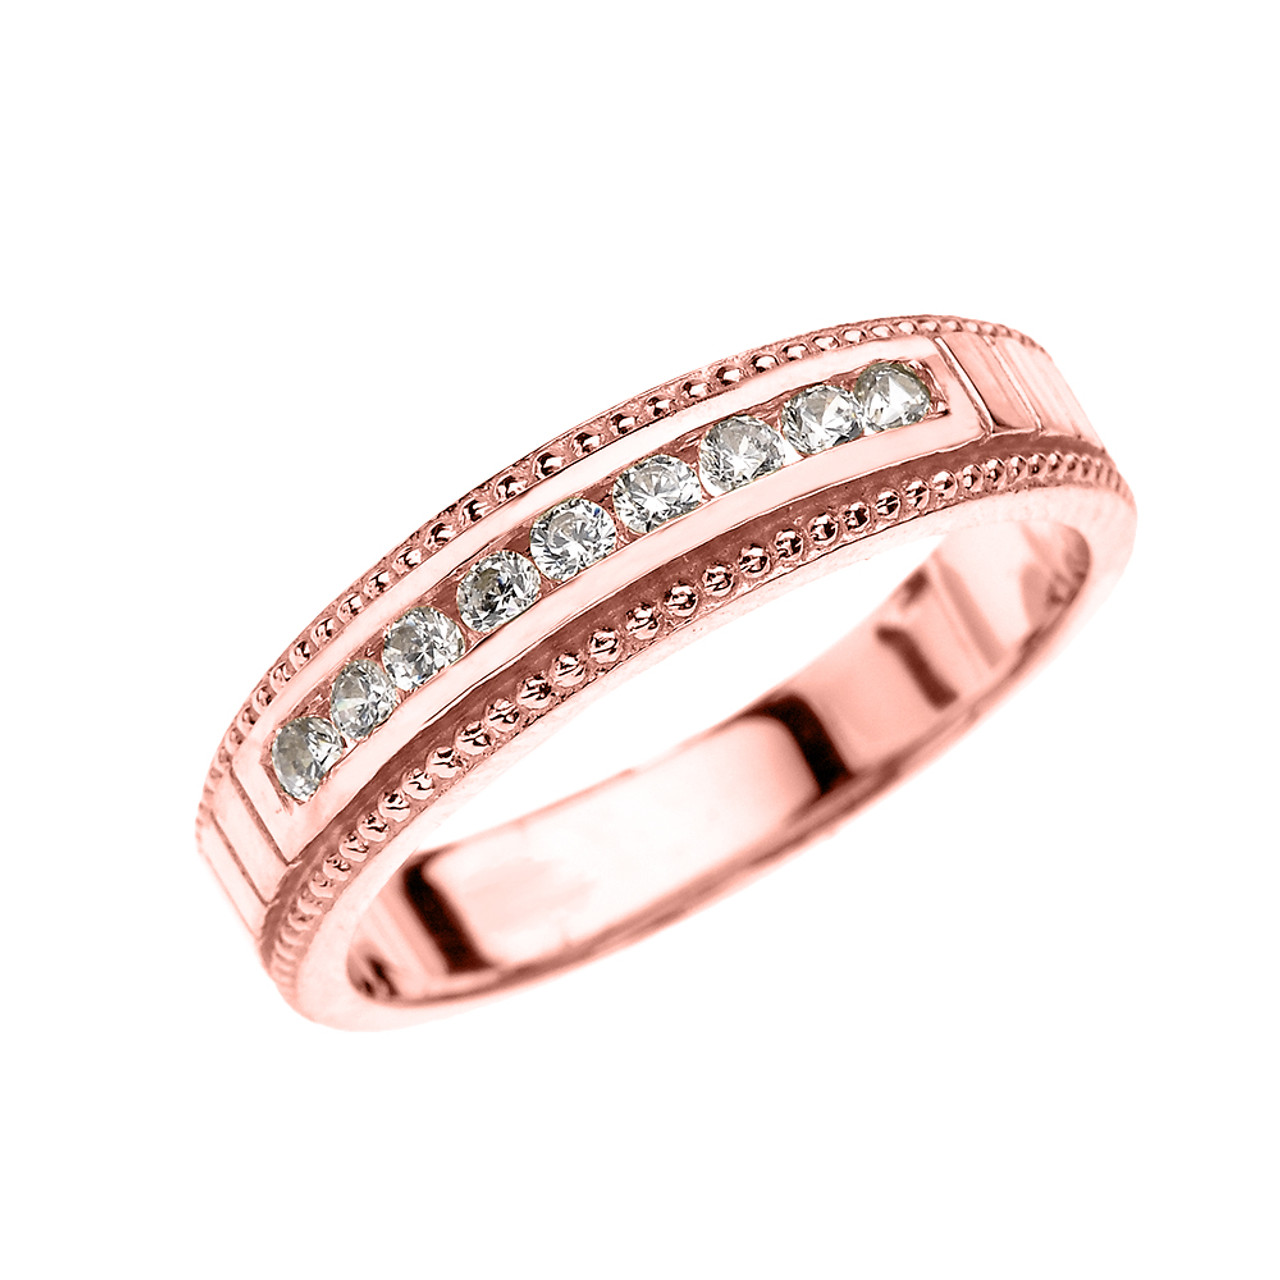  Rose  Gold  Diamond Wedding  Ring  For Him 